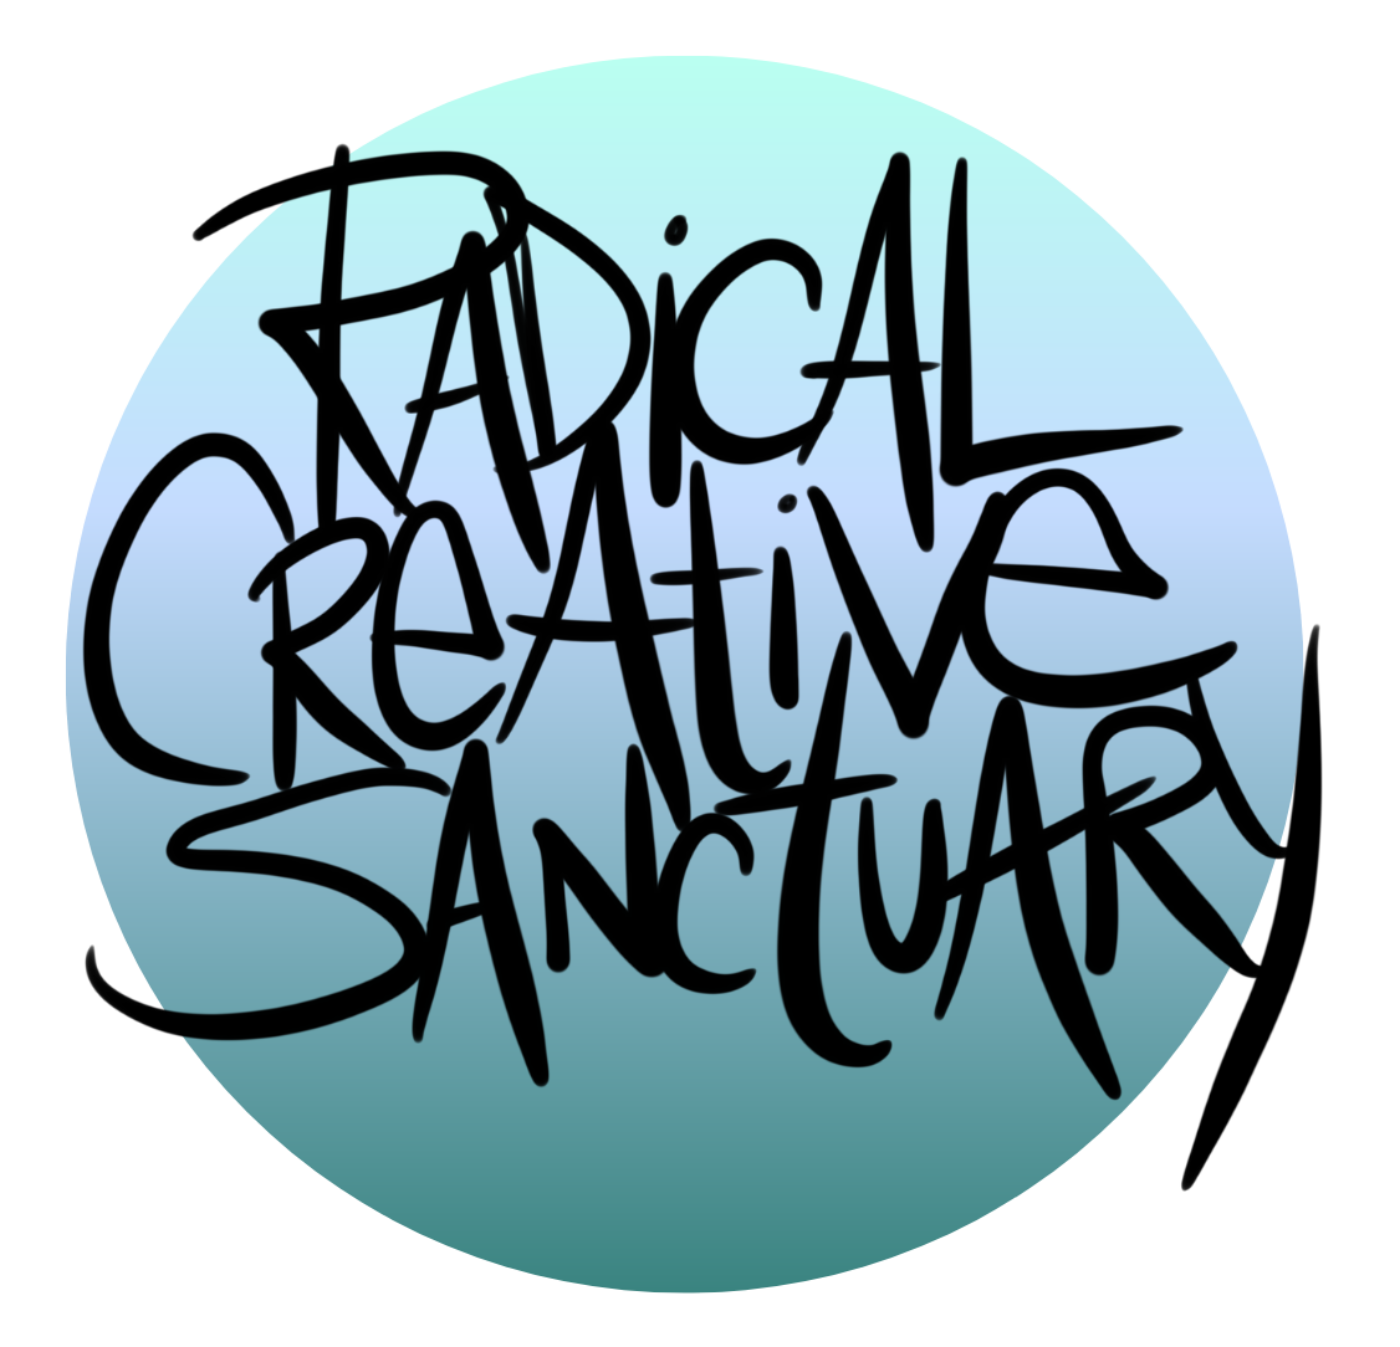 Radical Creative Sanctuary